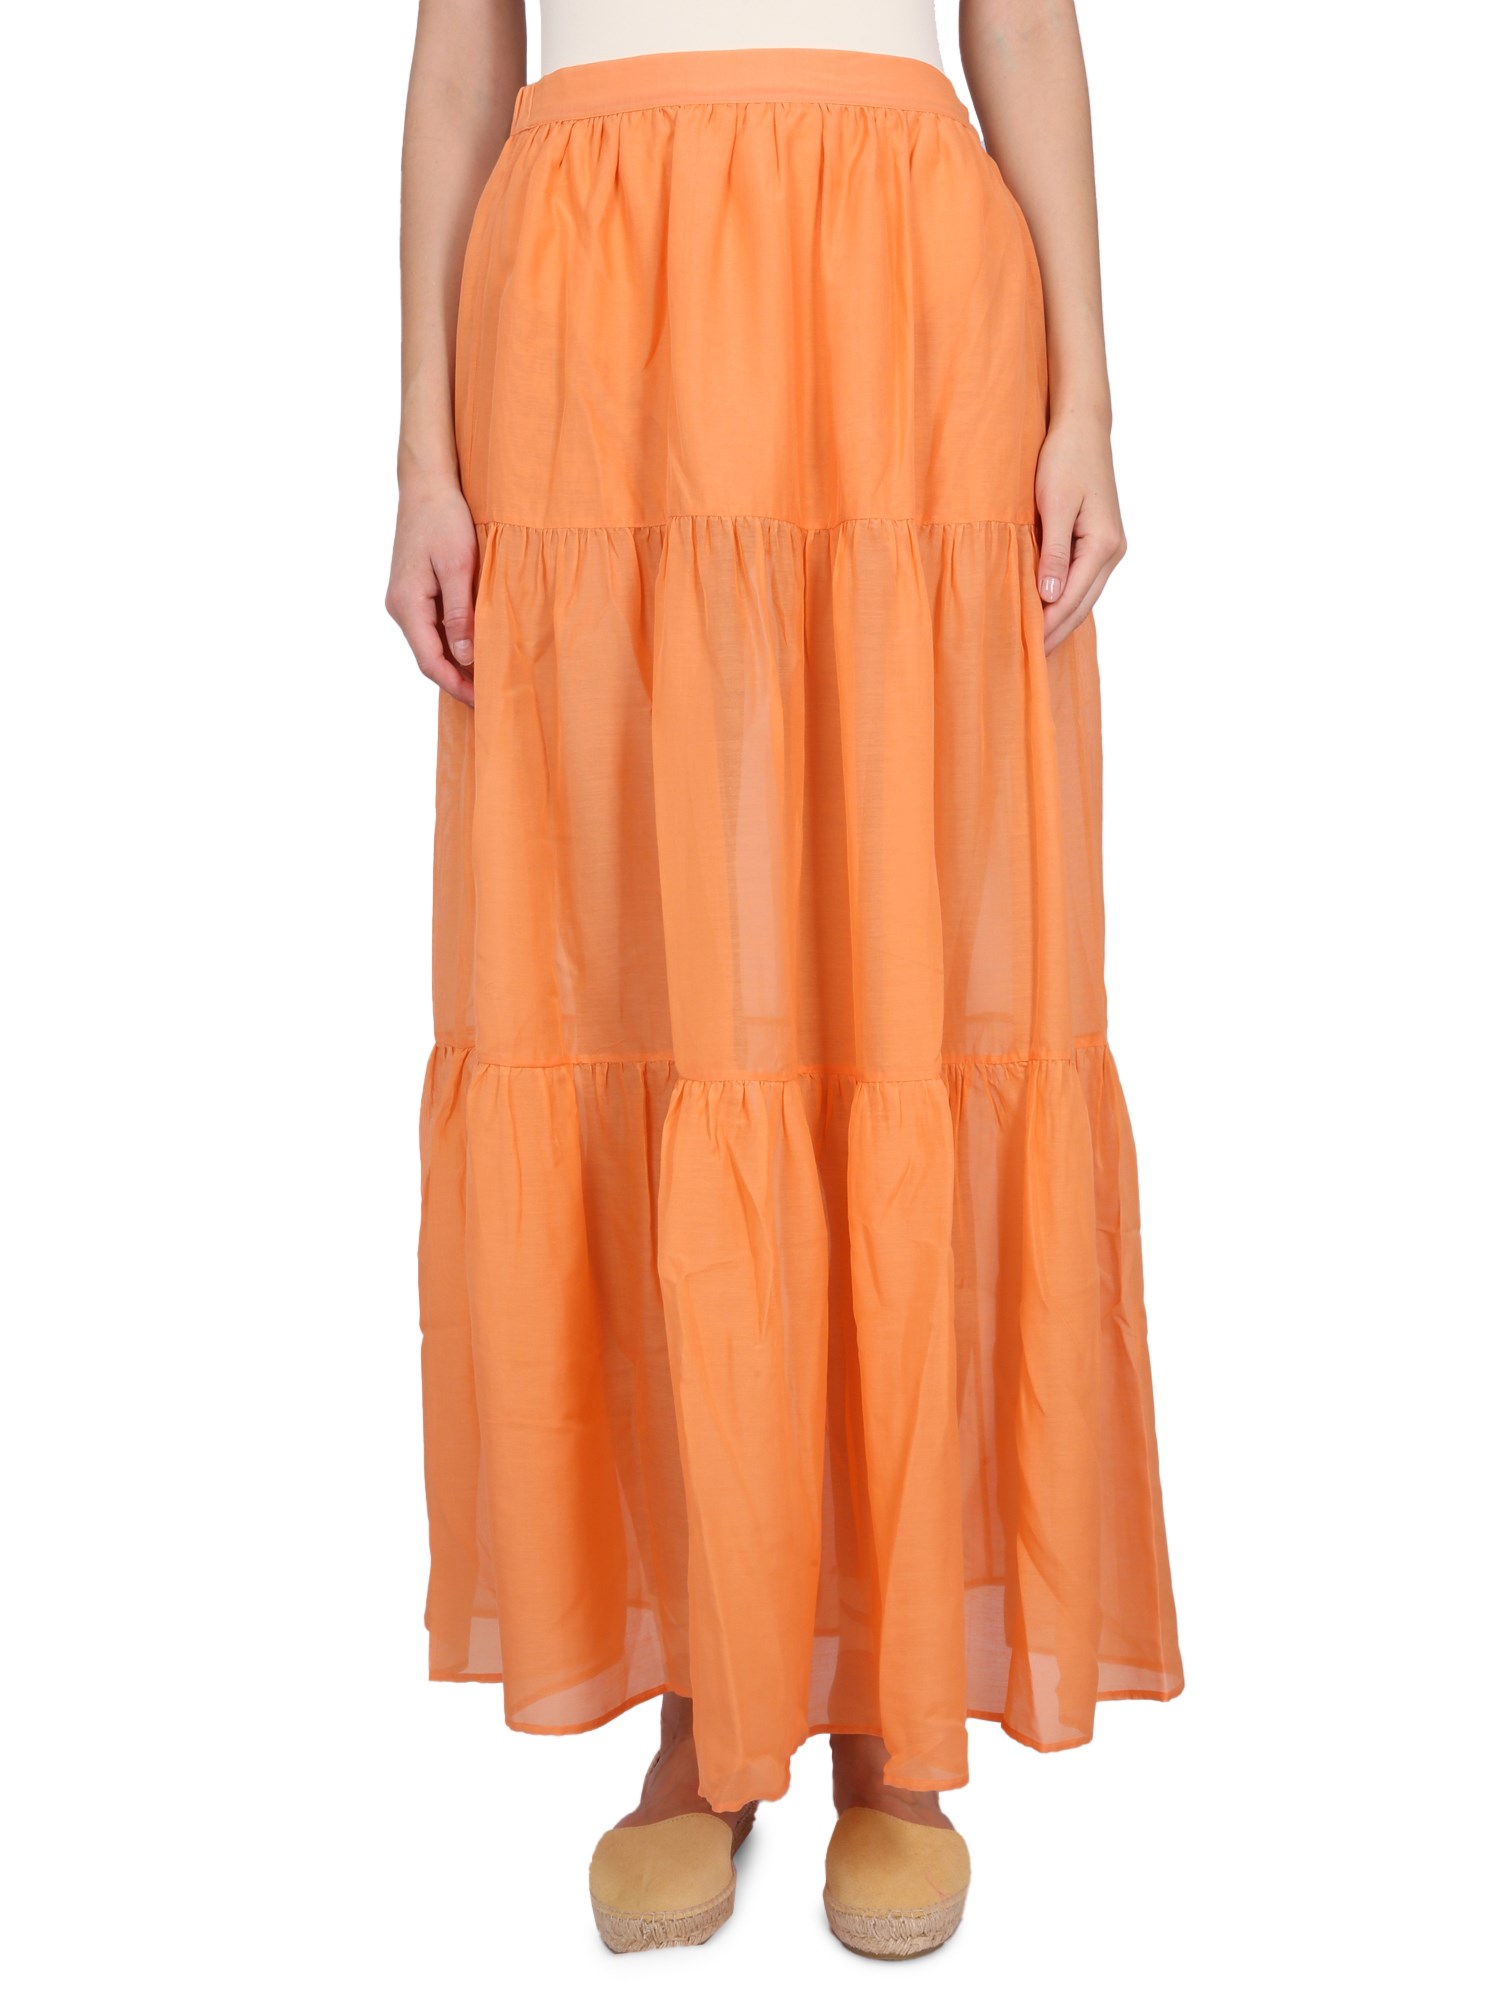 Shop Manebi Recife Skirt. In Orange